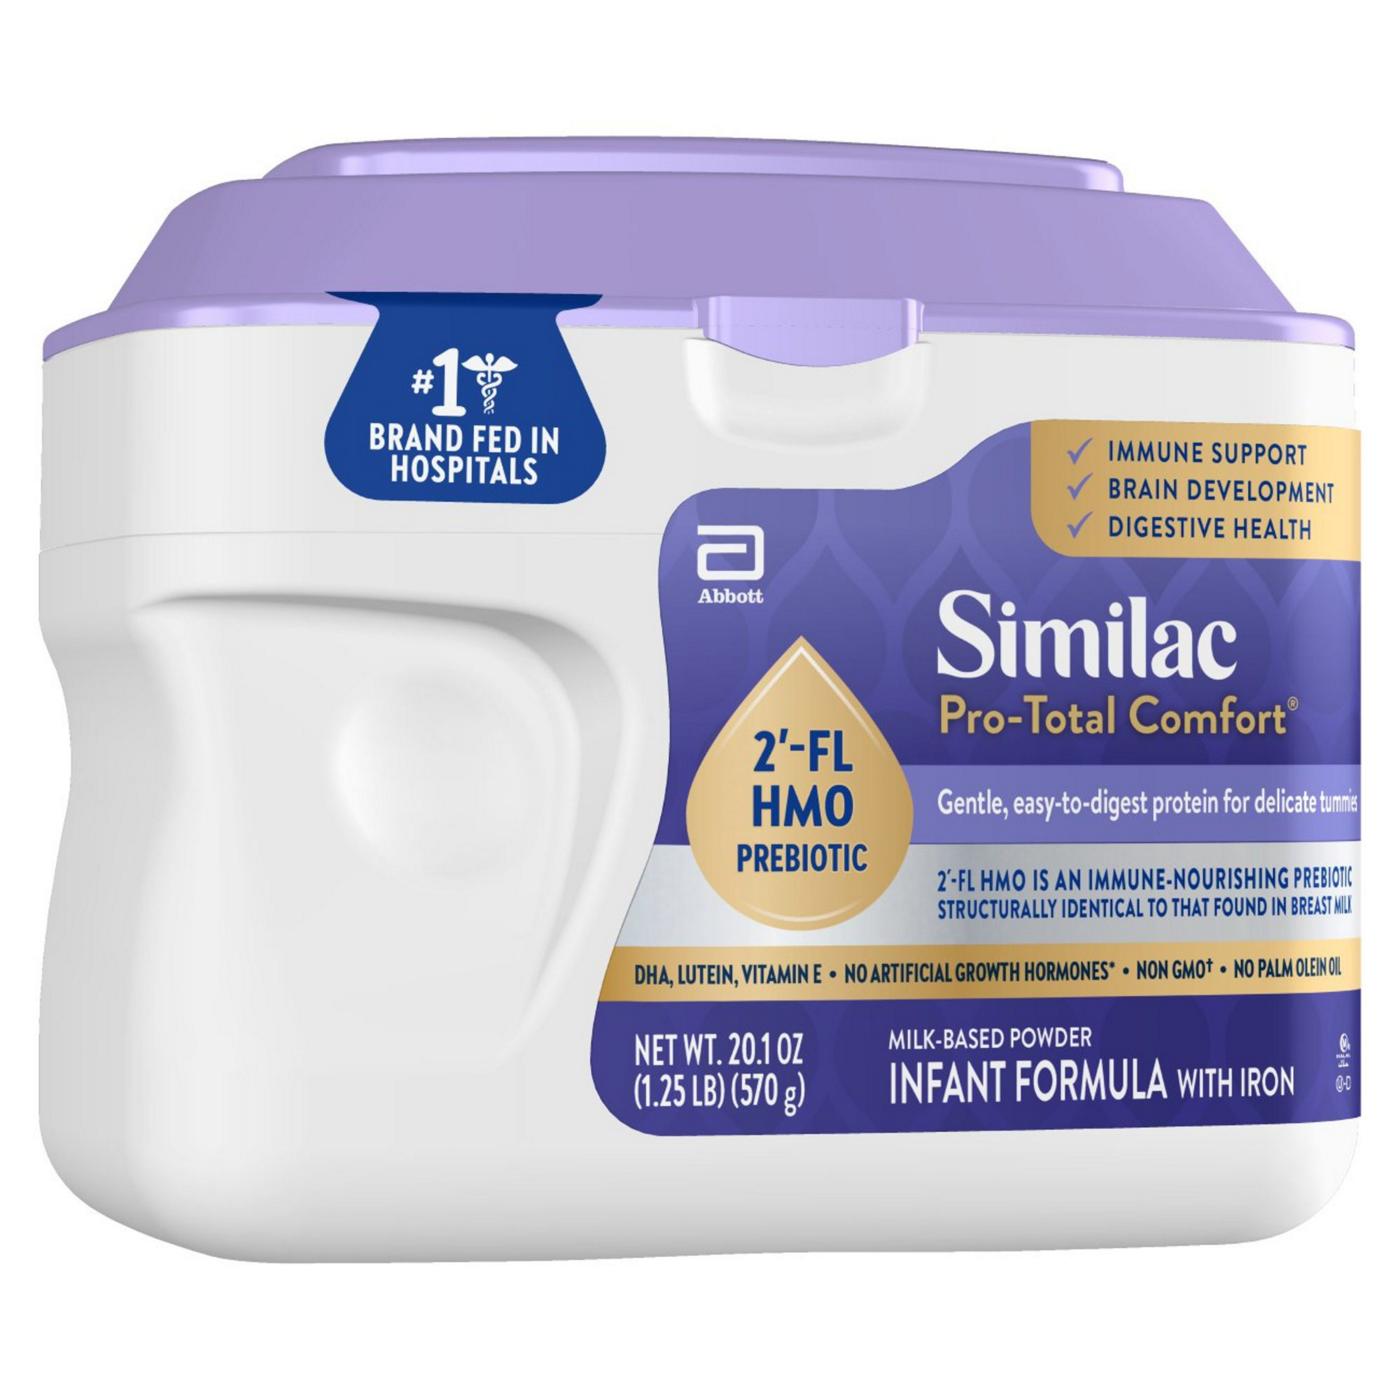 Similac Pro-Total Comfort Infant Formula Powder; image 11 of 12